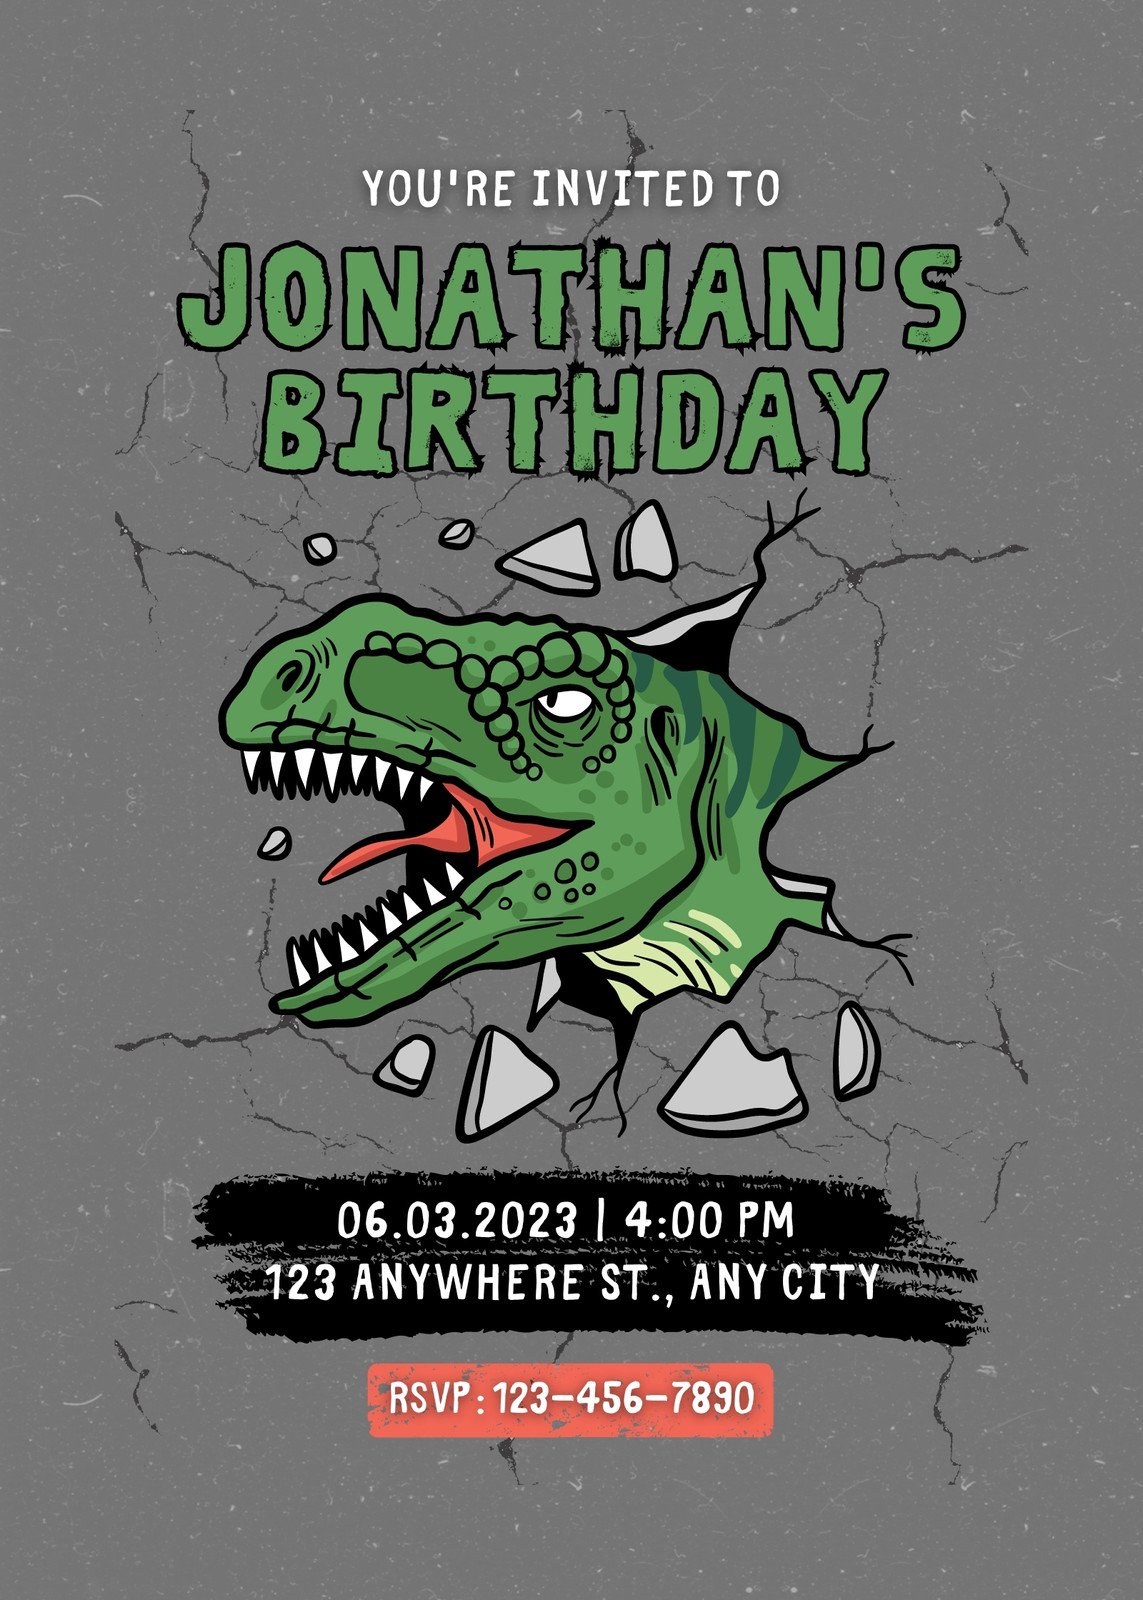 Dinosaur T-Rex Pool Party Girl Pink Birthday Invitation